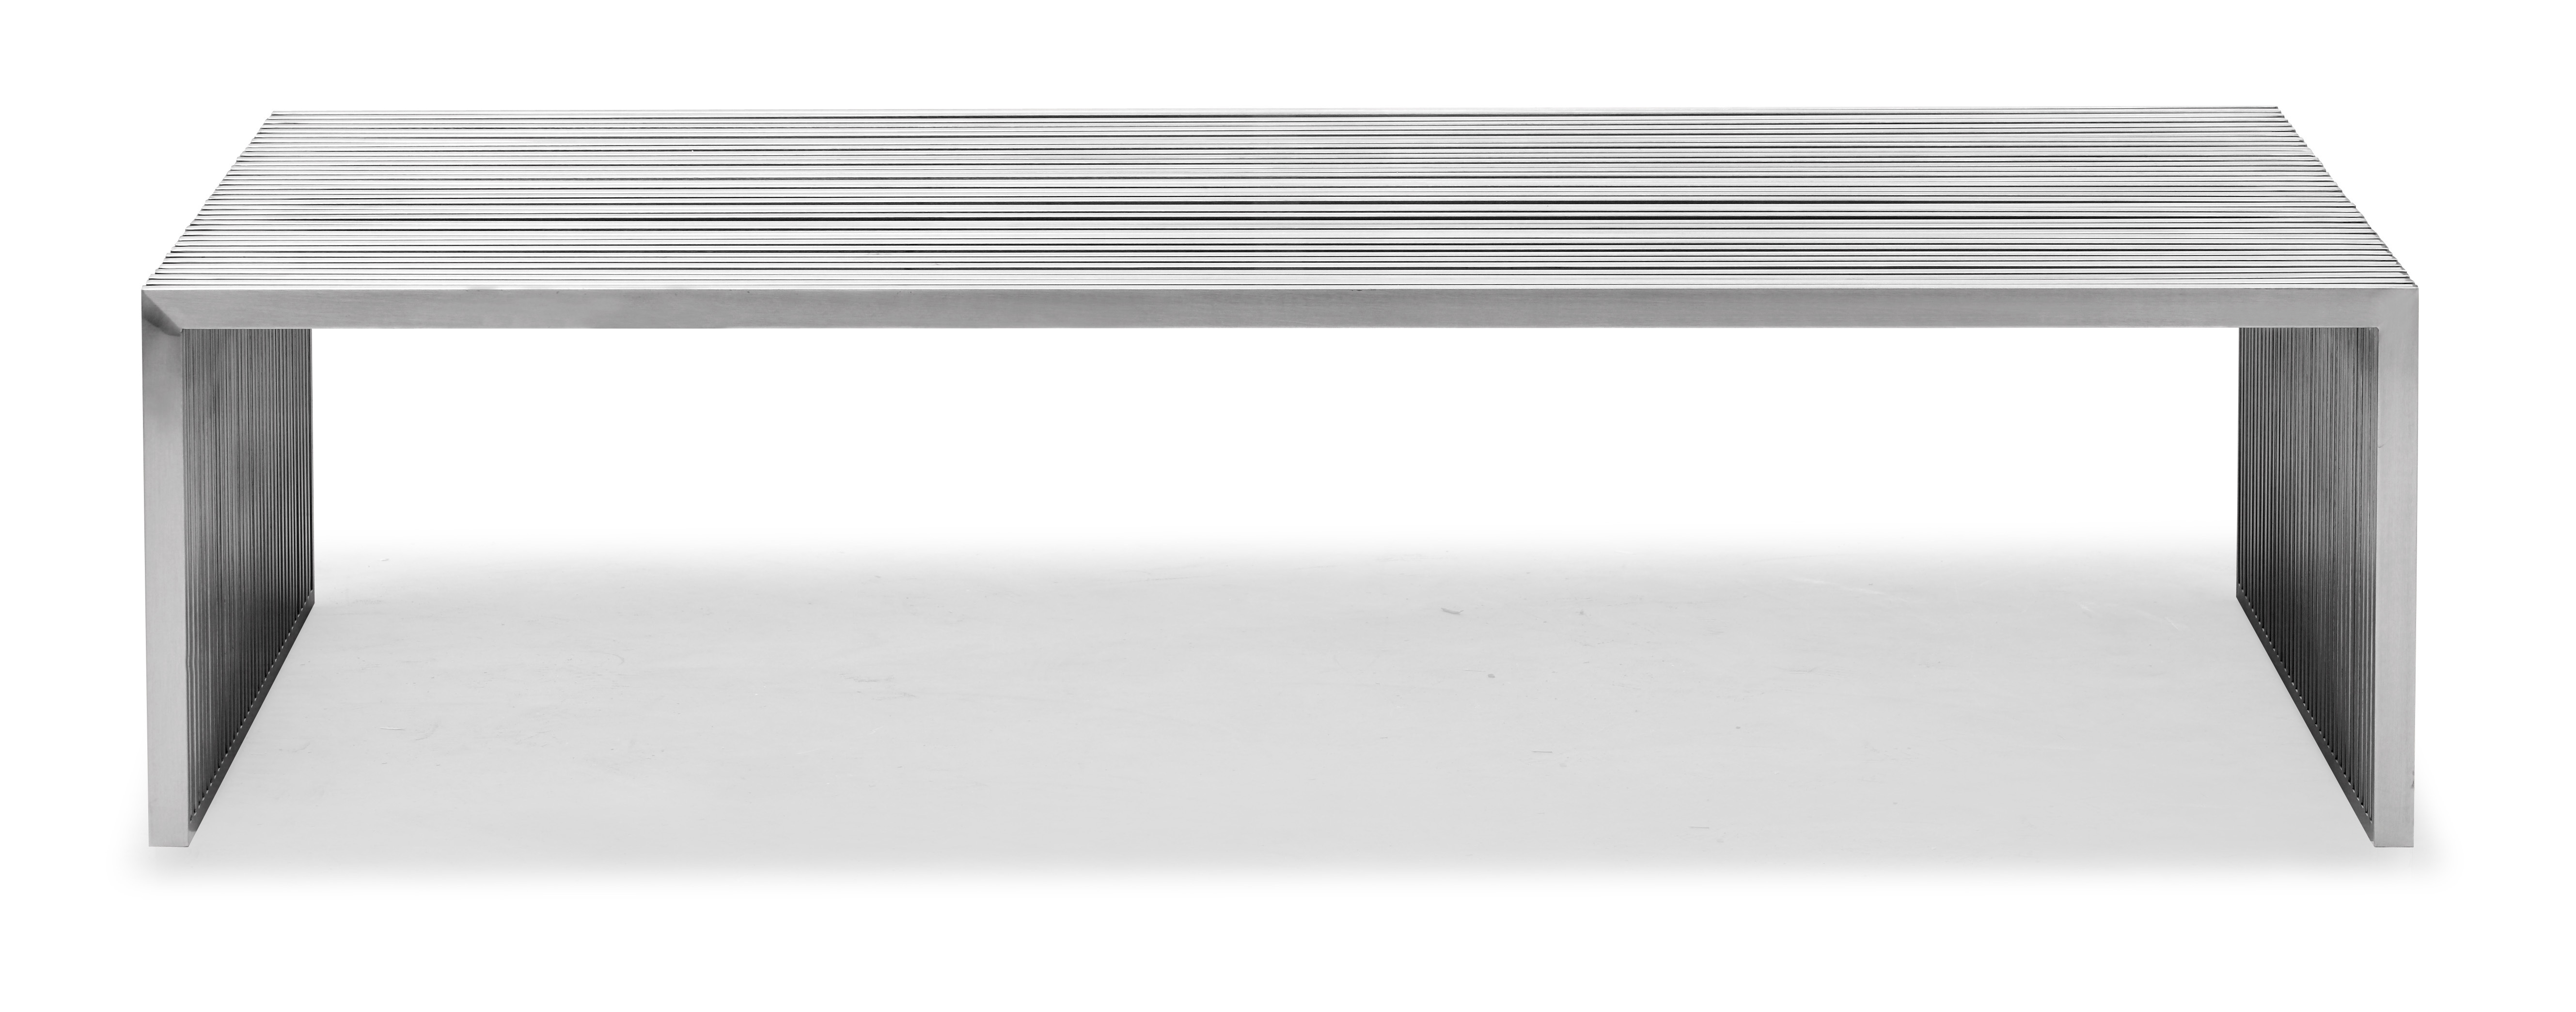 Silver Metal Coffee Table Idea